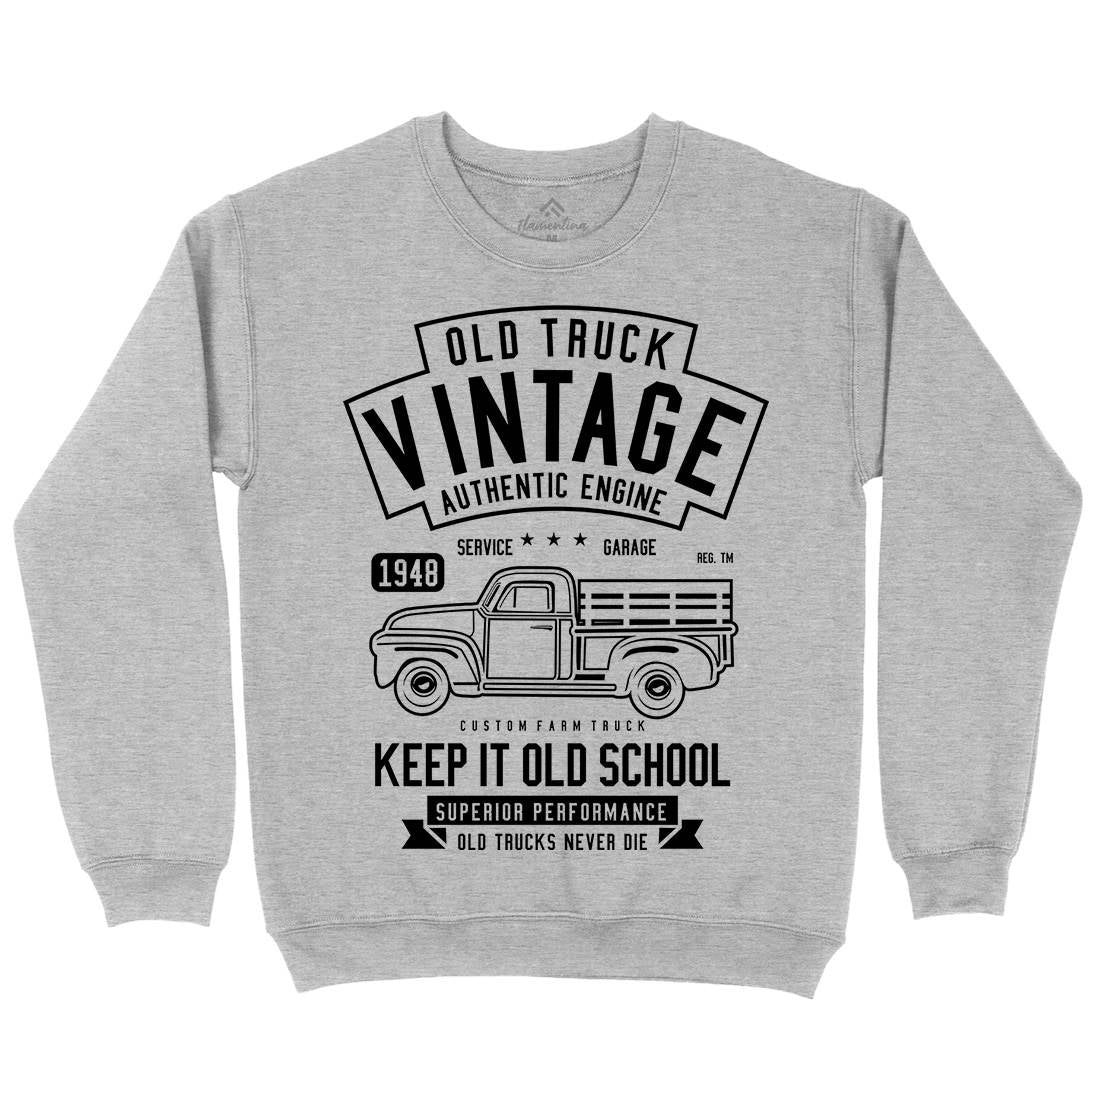 Old Truck Vintage Kids Crew Neck Sweatshirt Cars B593